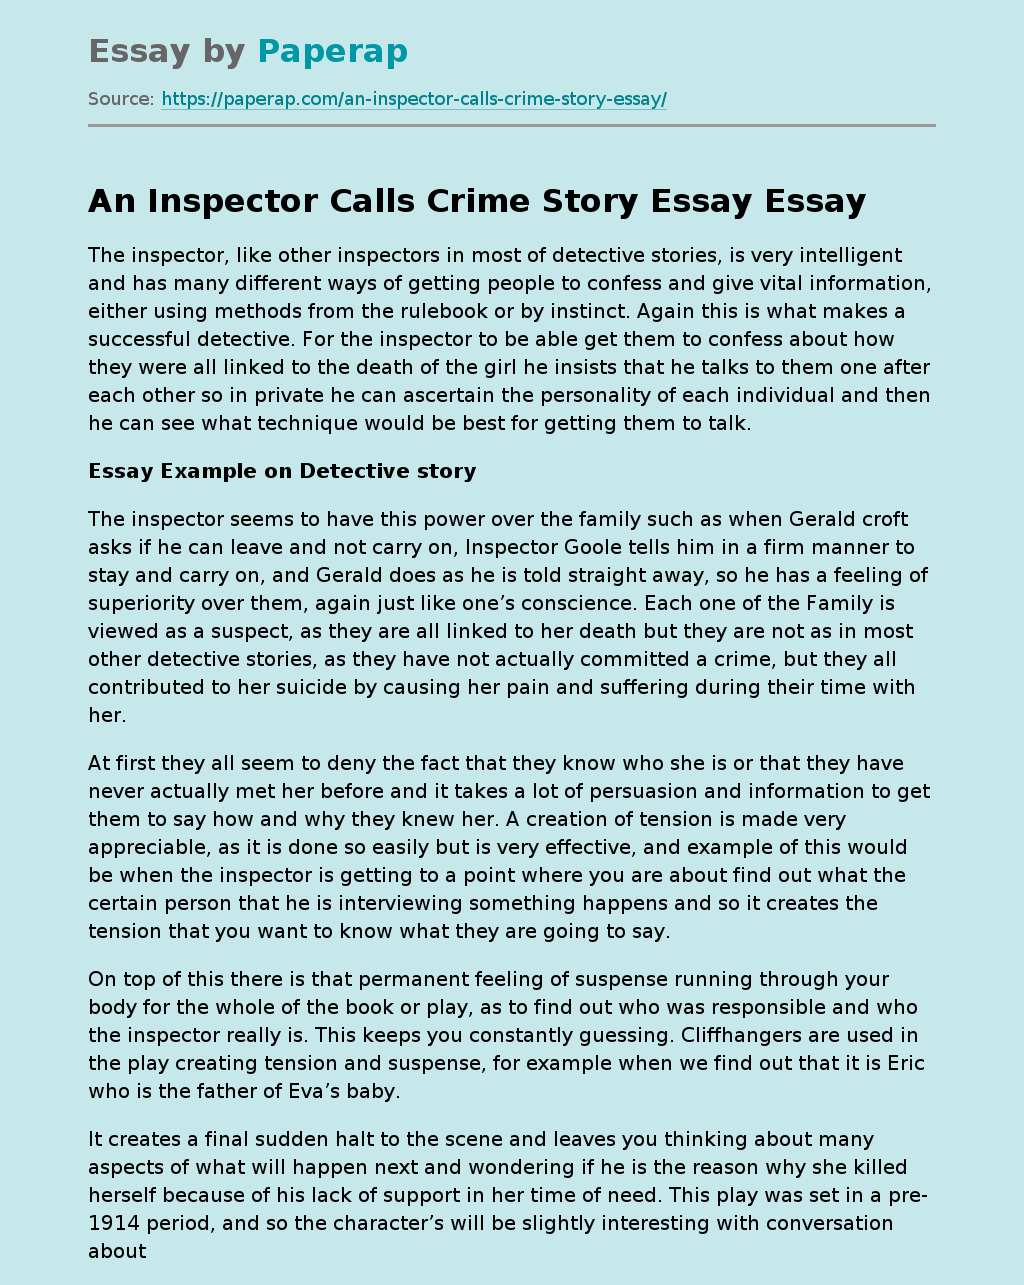 An Inspector Calls Crime Story Essay